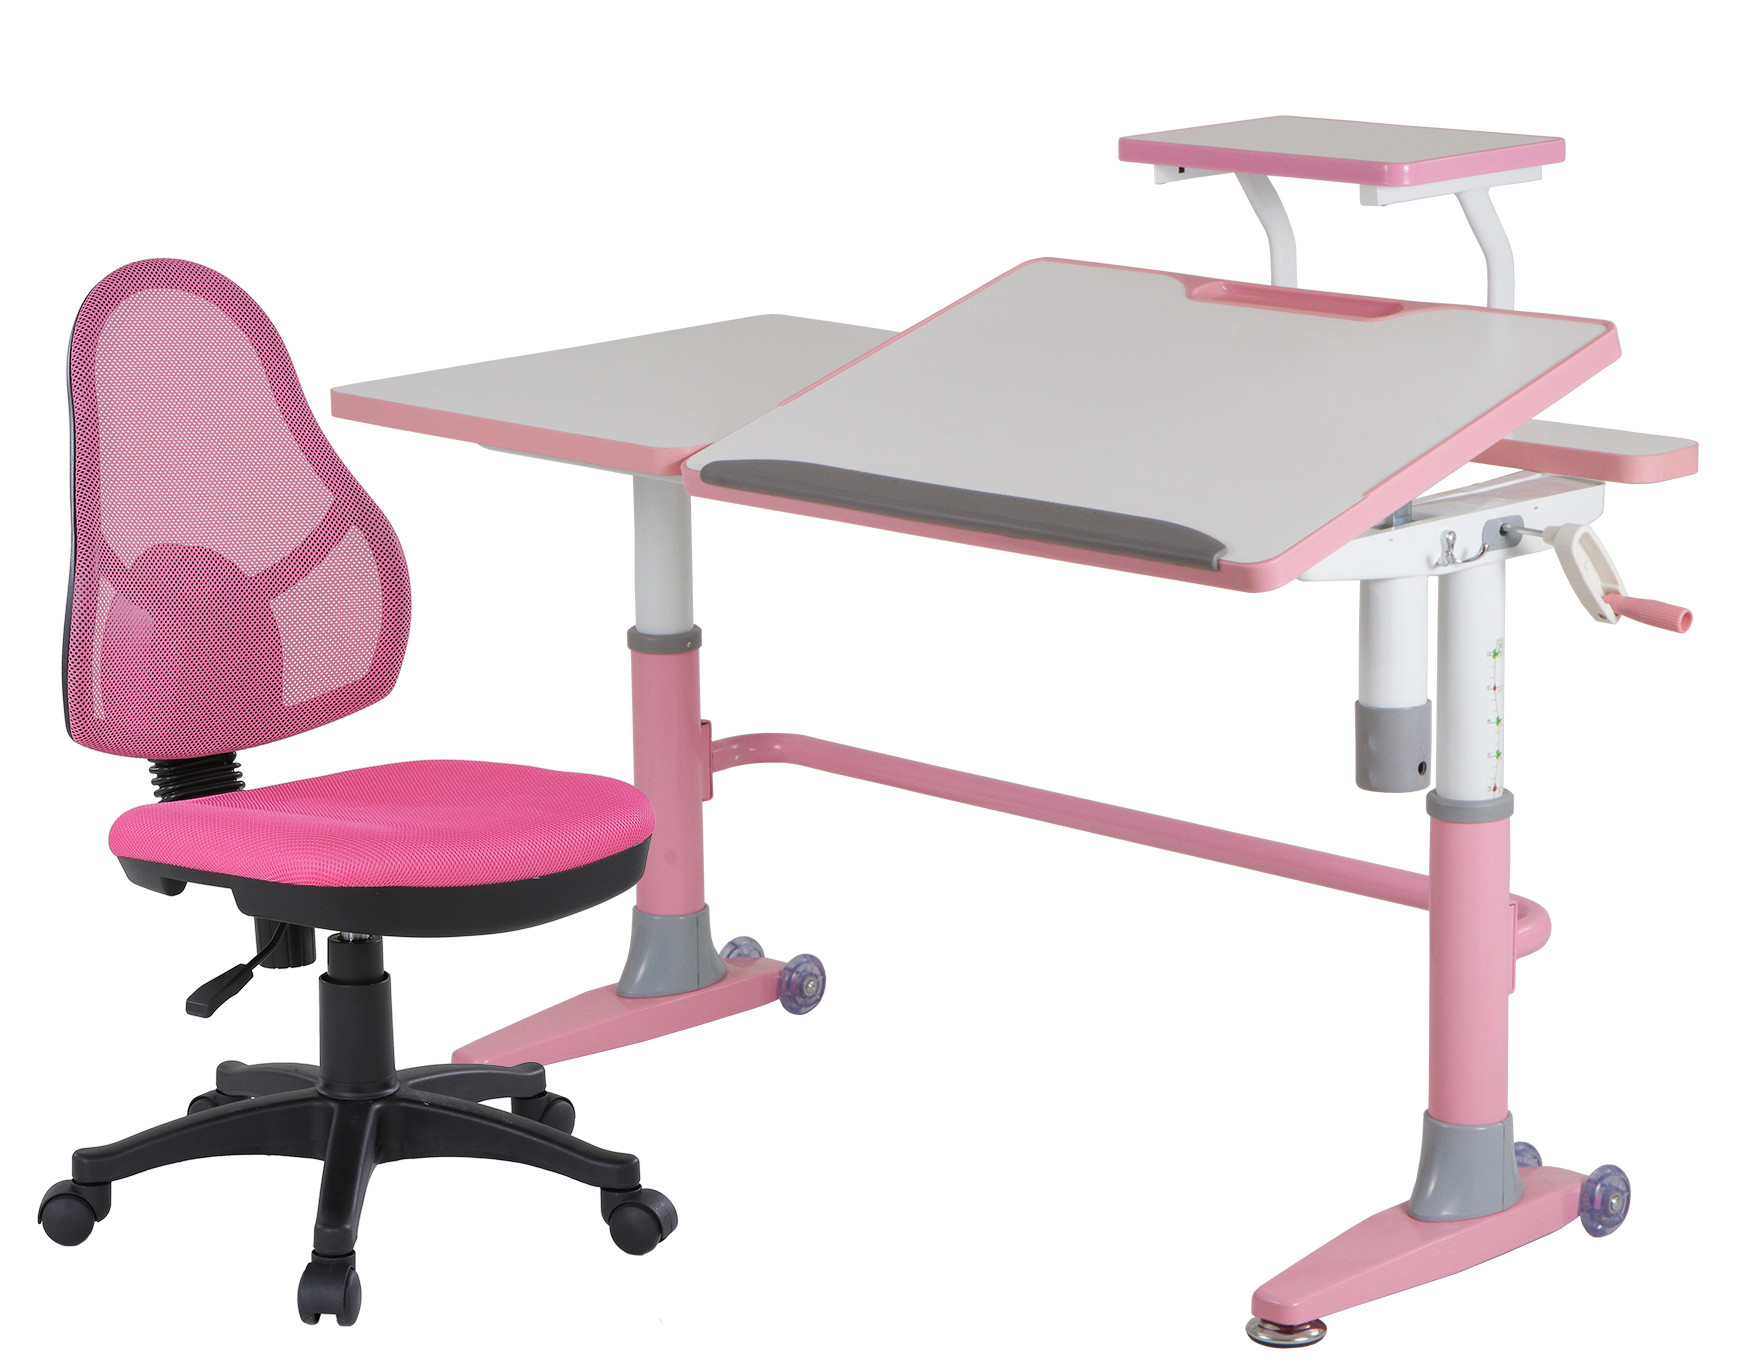 Kids White Desk Chair
 Kid Desk With Chair Design – HomesFeed